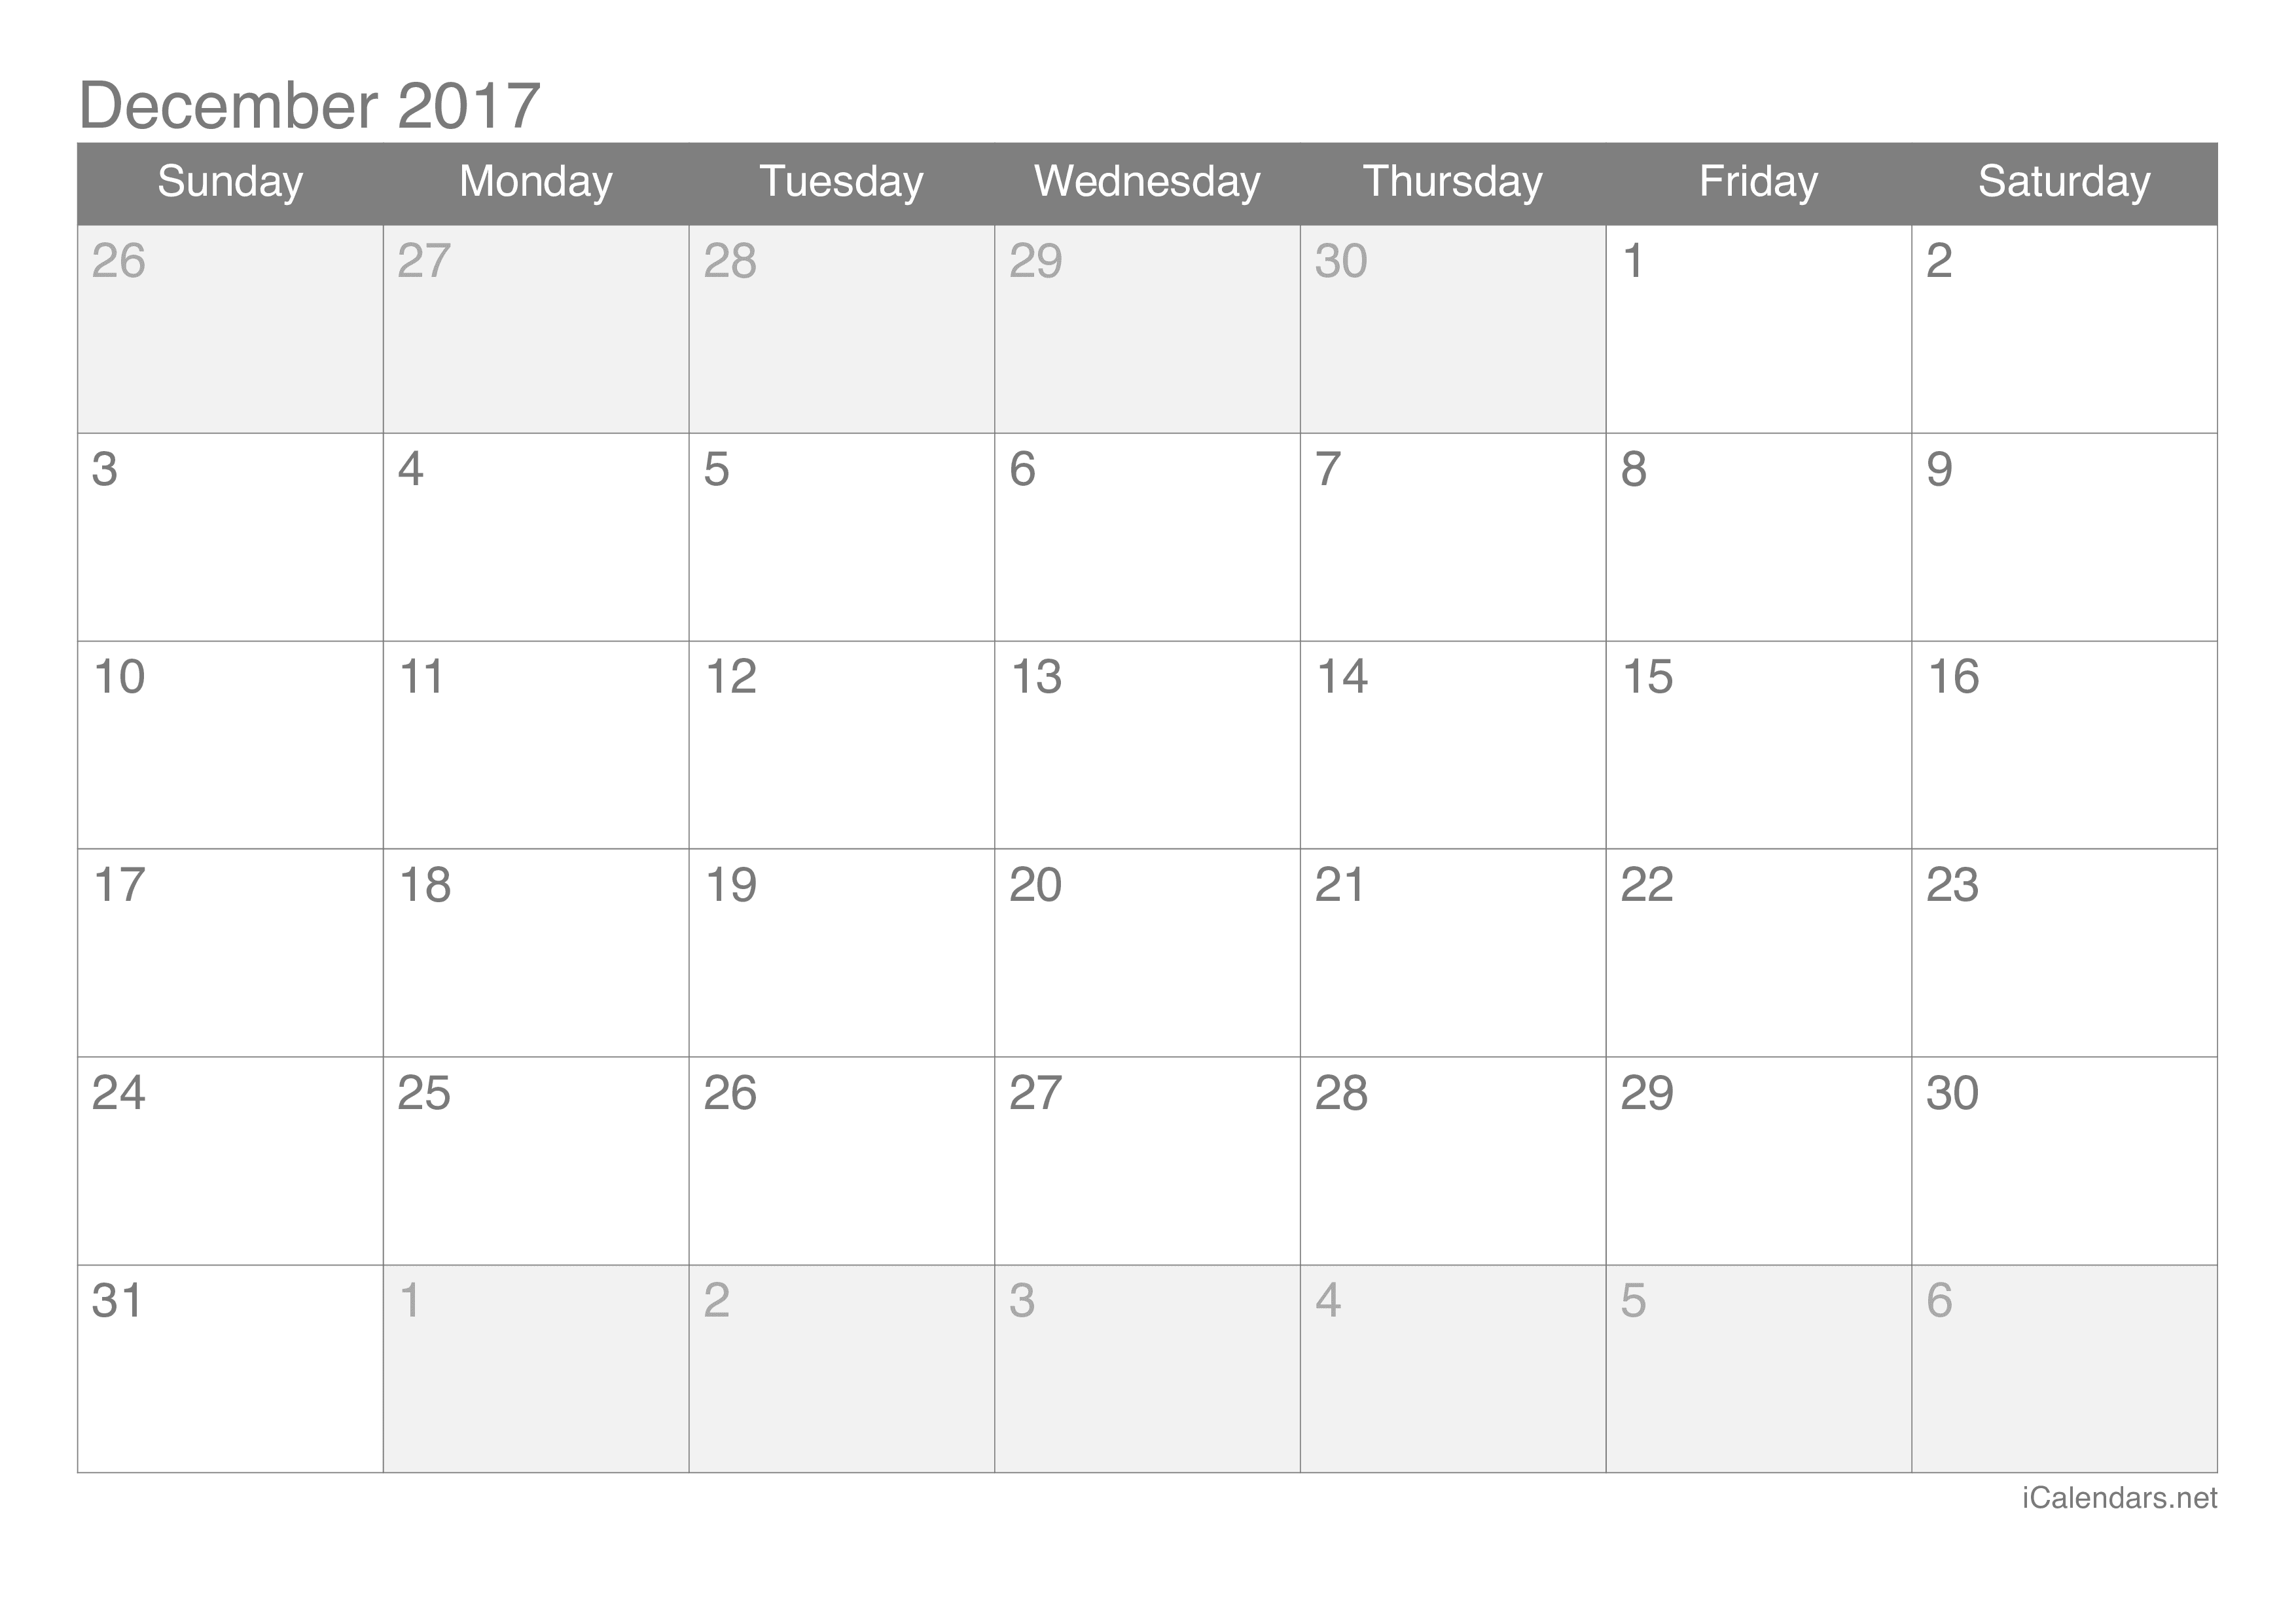 December 2017 Printable Calendar icalendars net